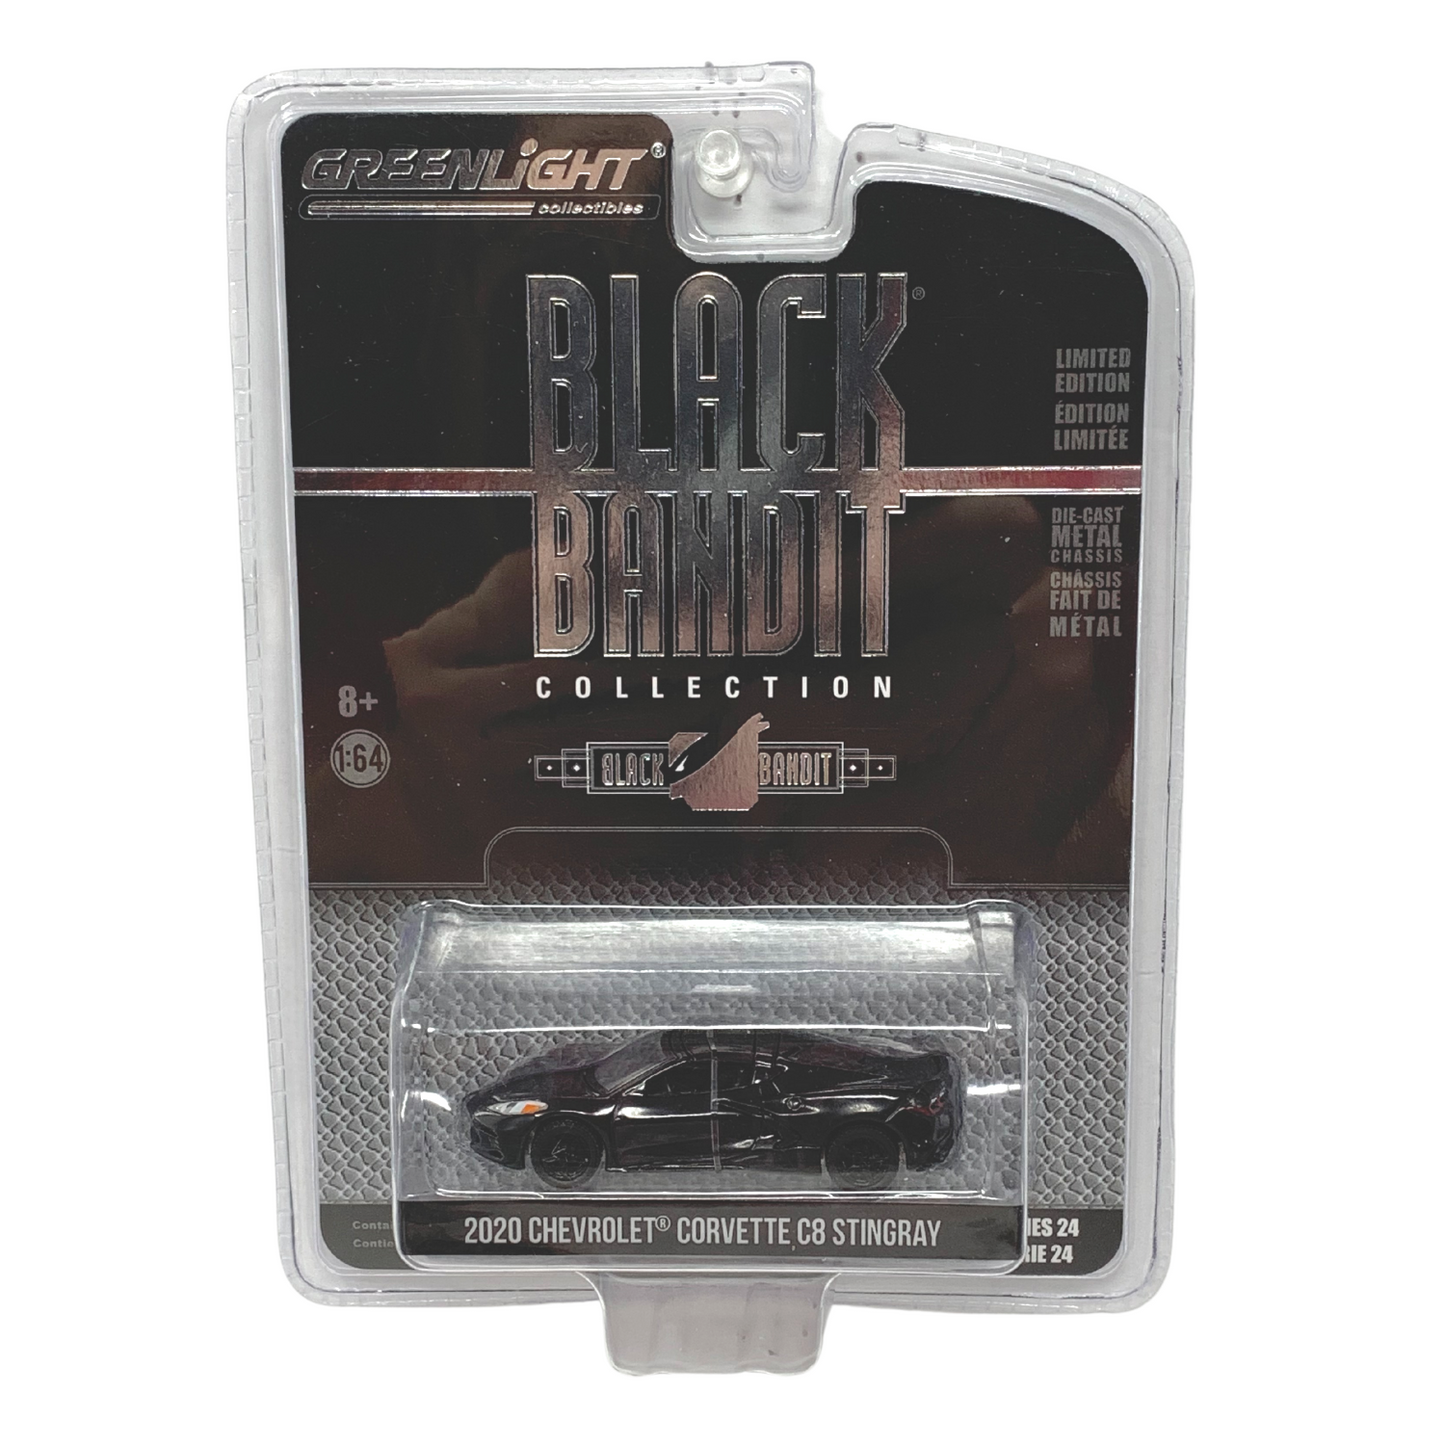 Greenlight Black Bandit Series 24 2020 Chevy Corvette C8 Stingray 1:64 Diecast